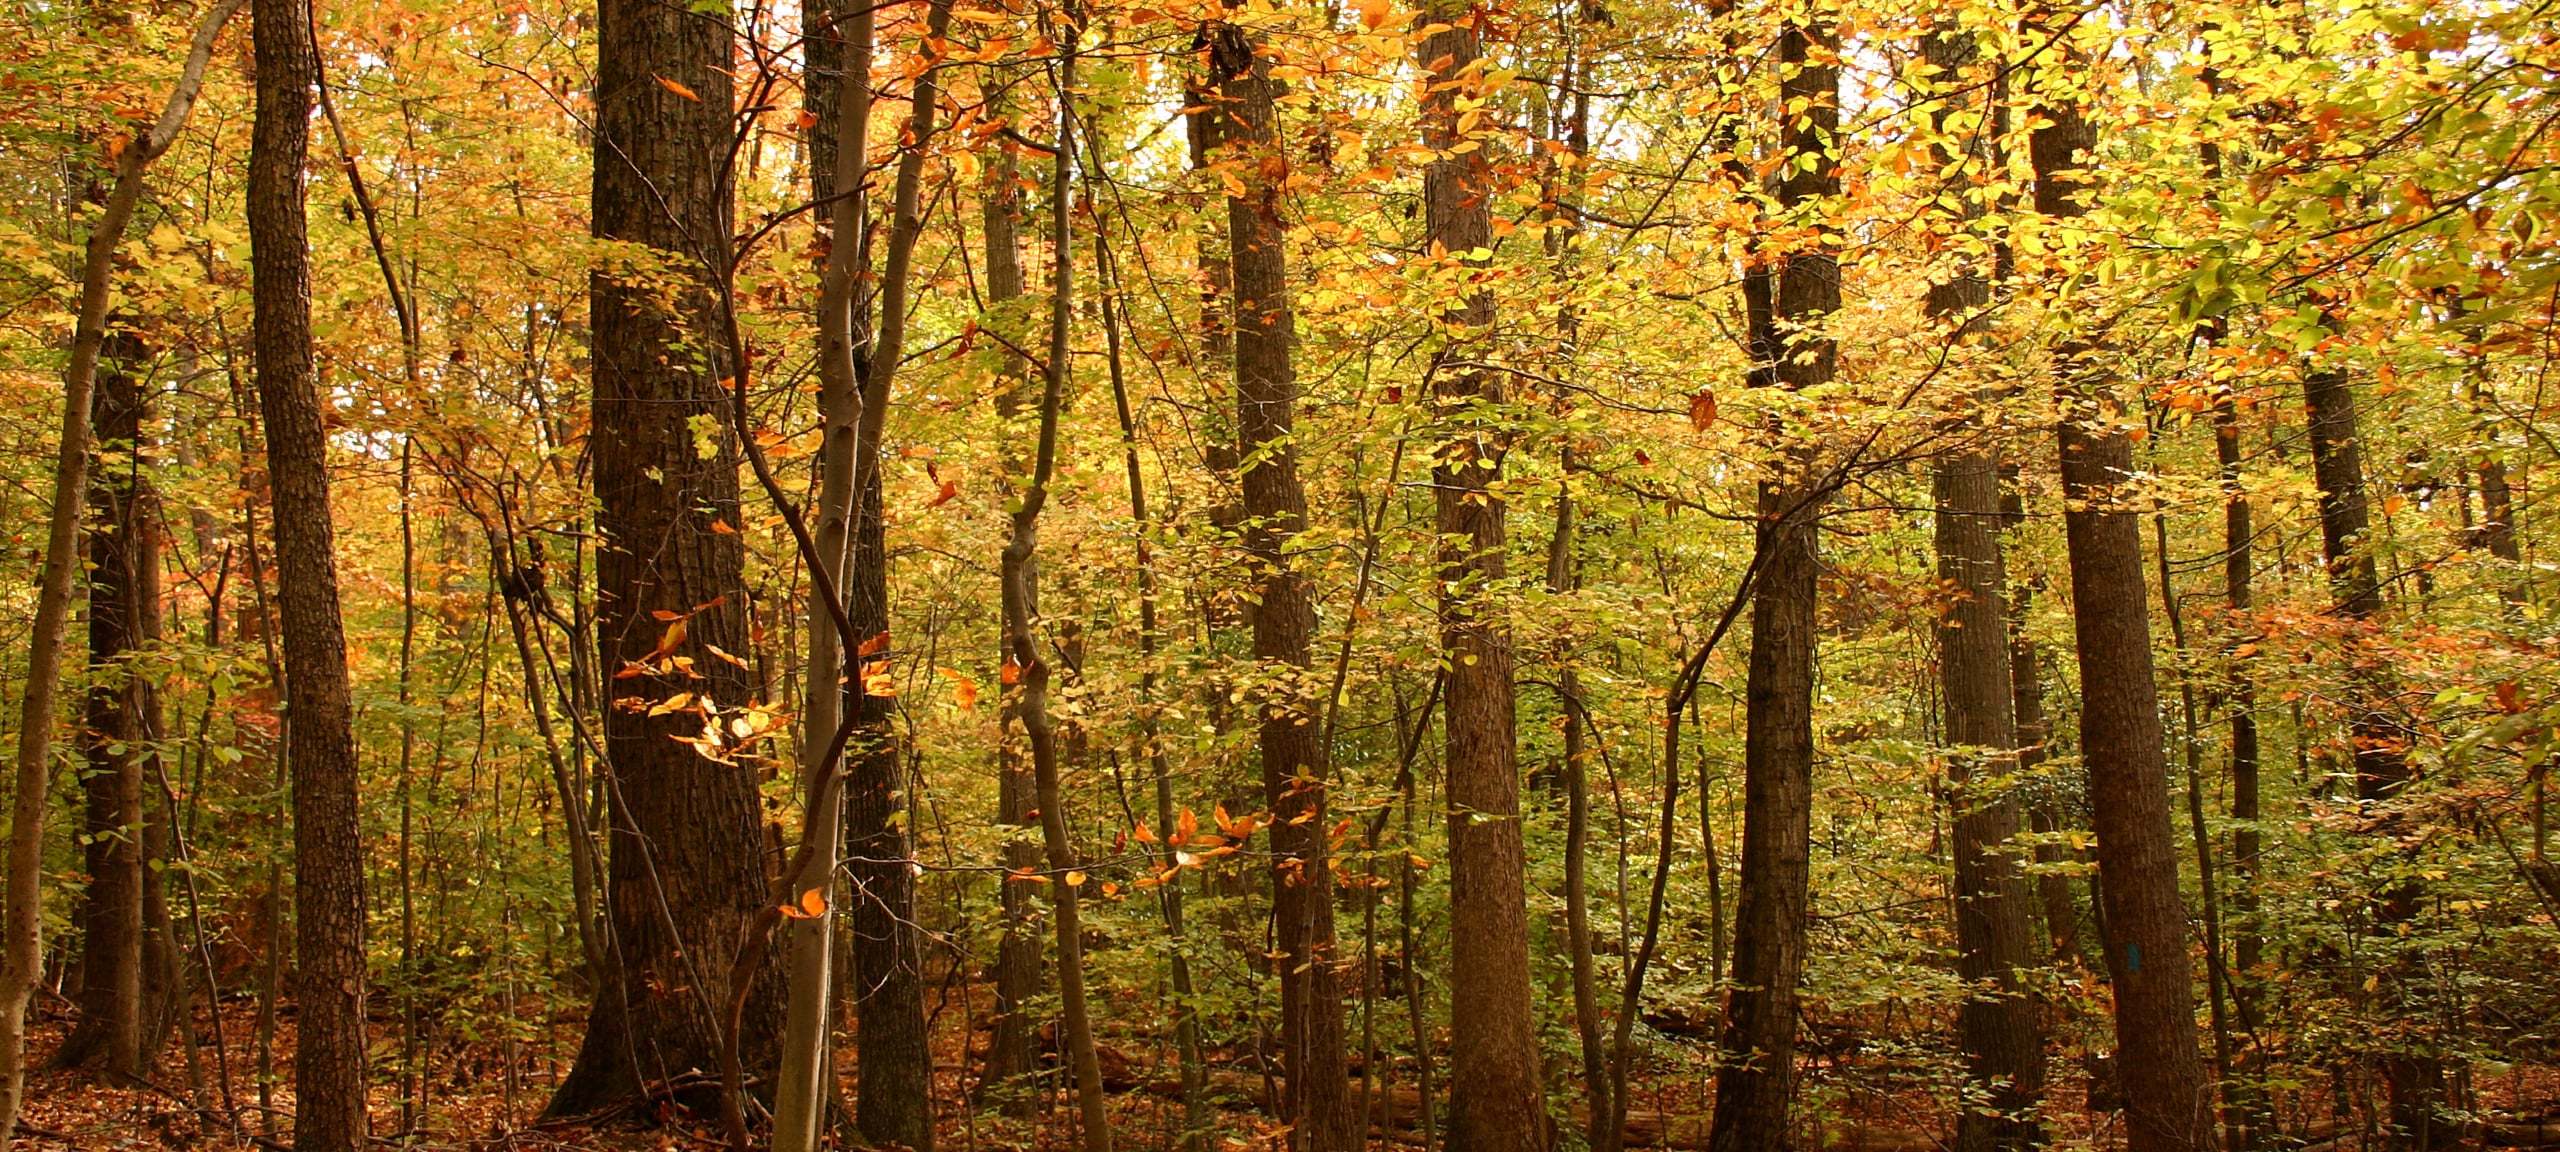 Autumn forest in Maryland near Davidsonville